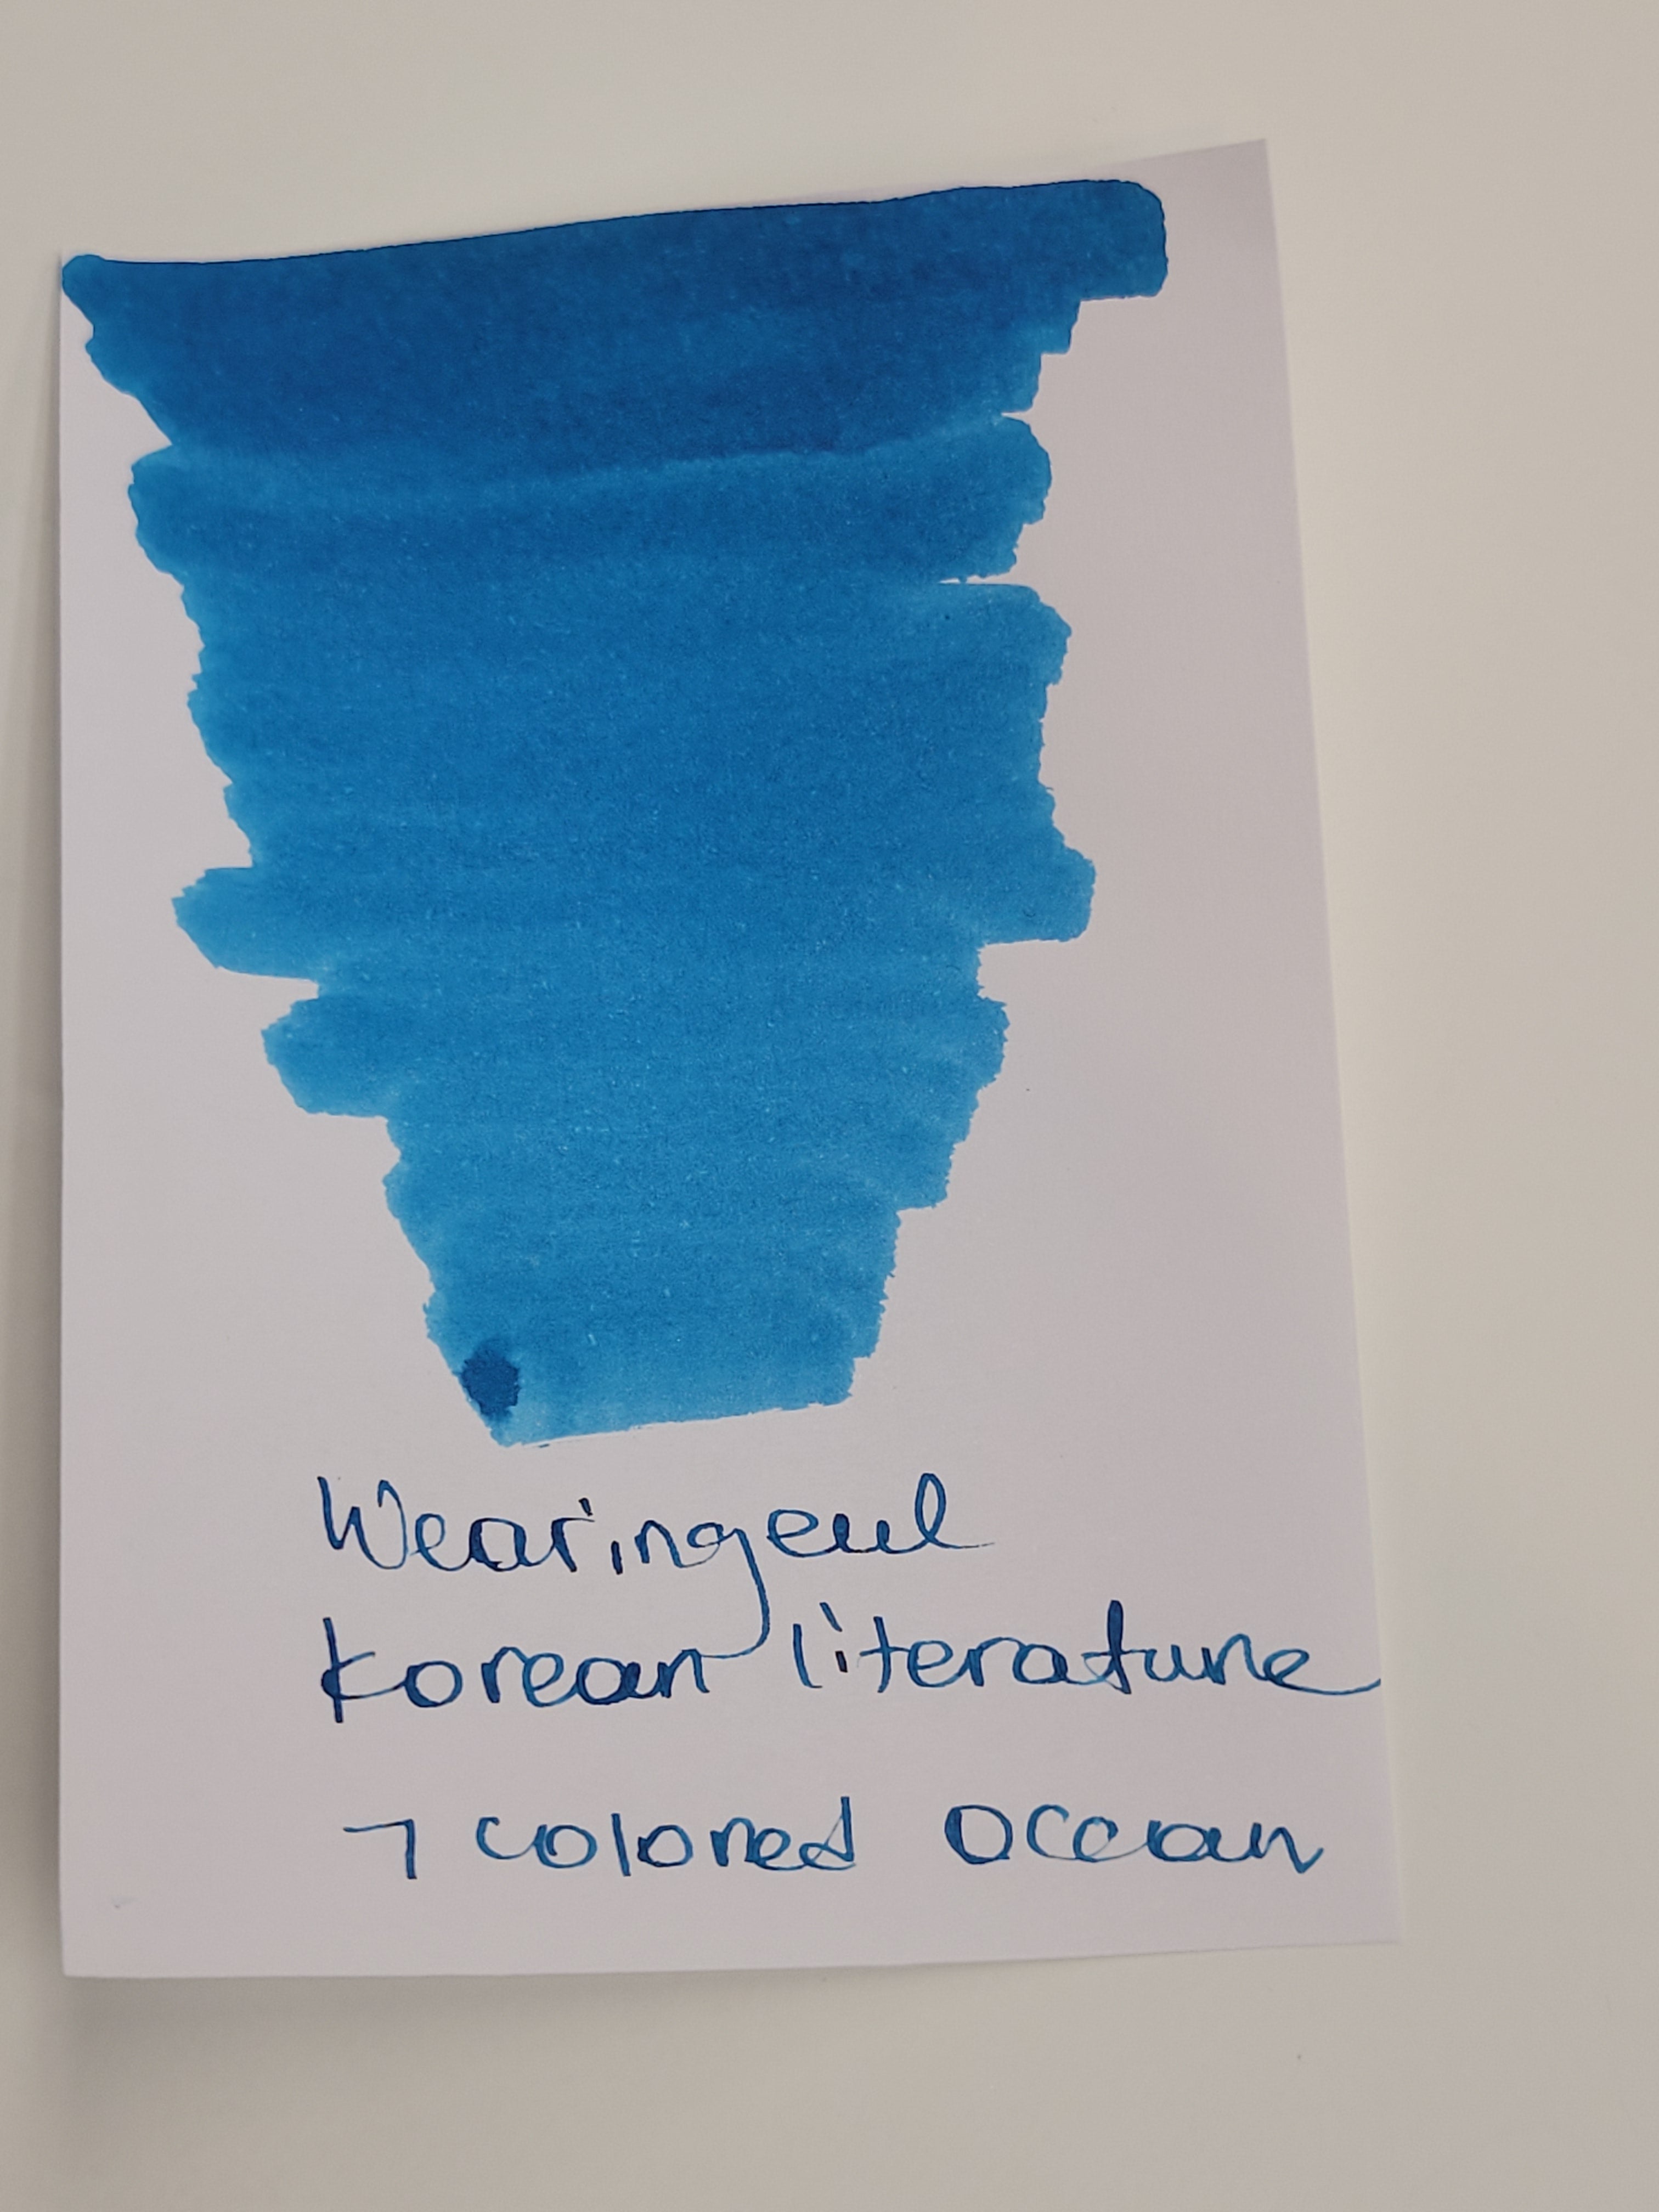 Wearingeul Korean Literature Ink Bottle - 7 Colored Ocean (30 ml) Wearingeul